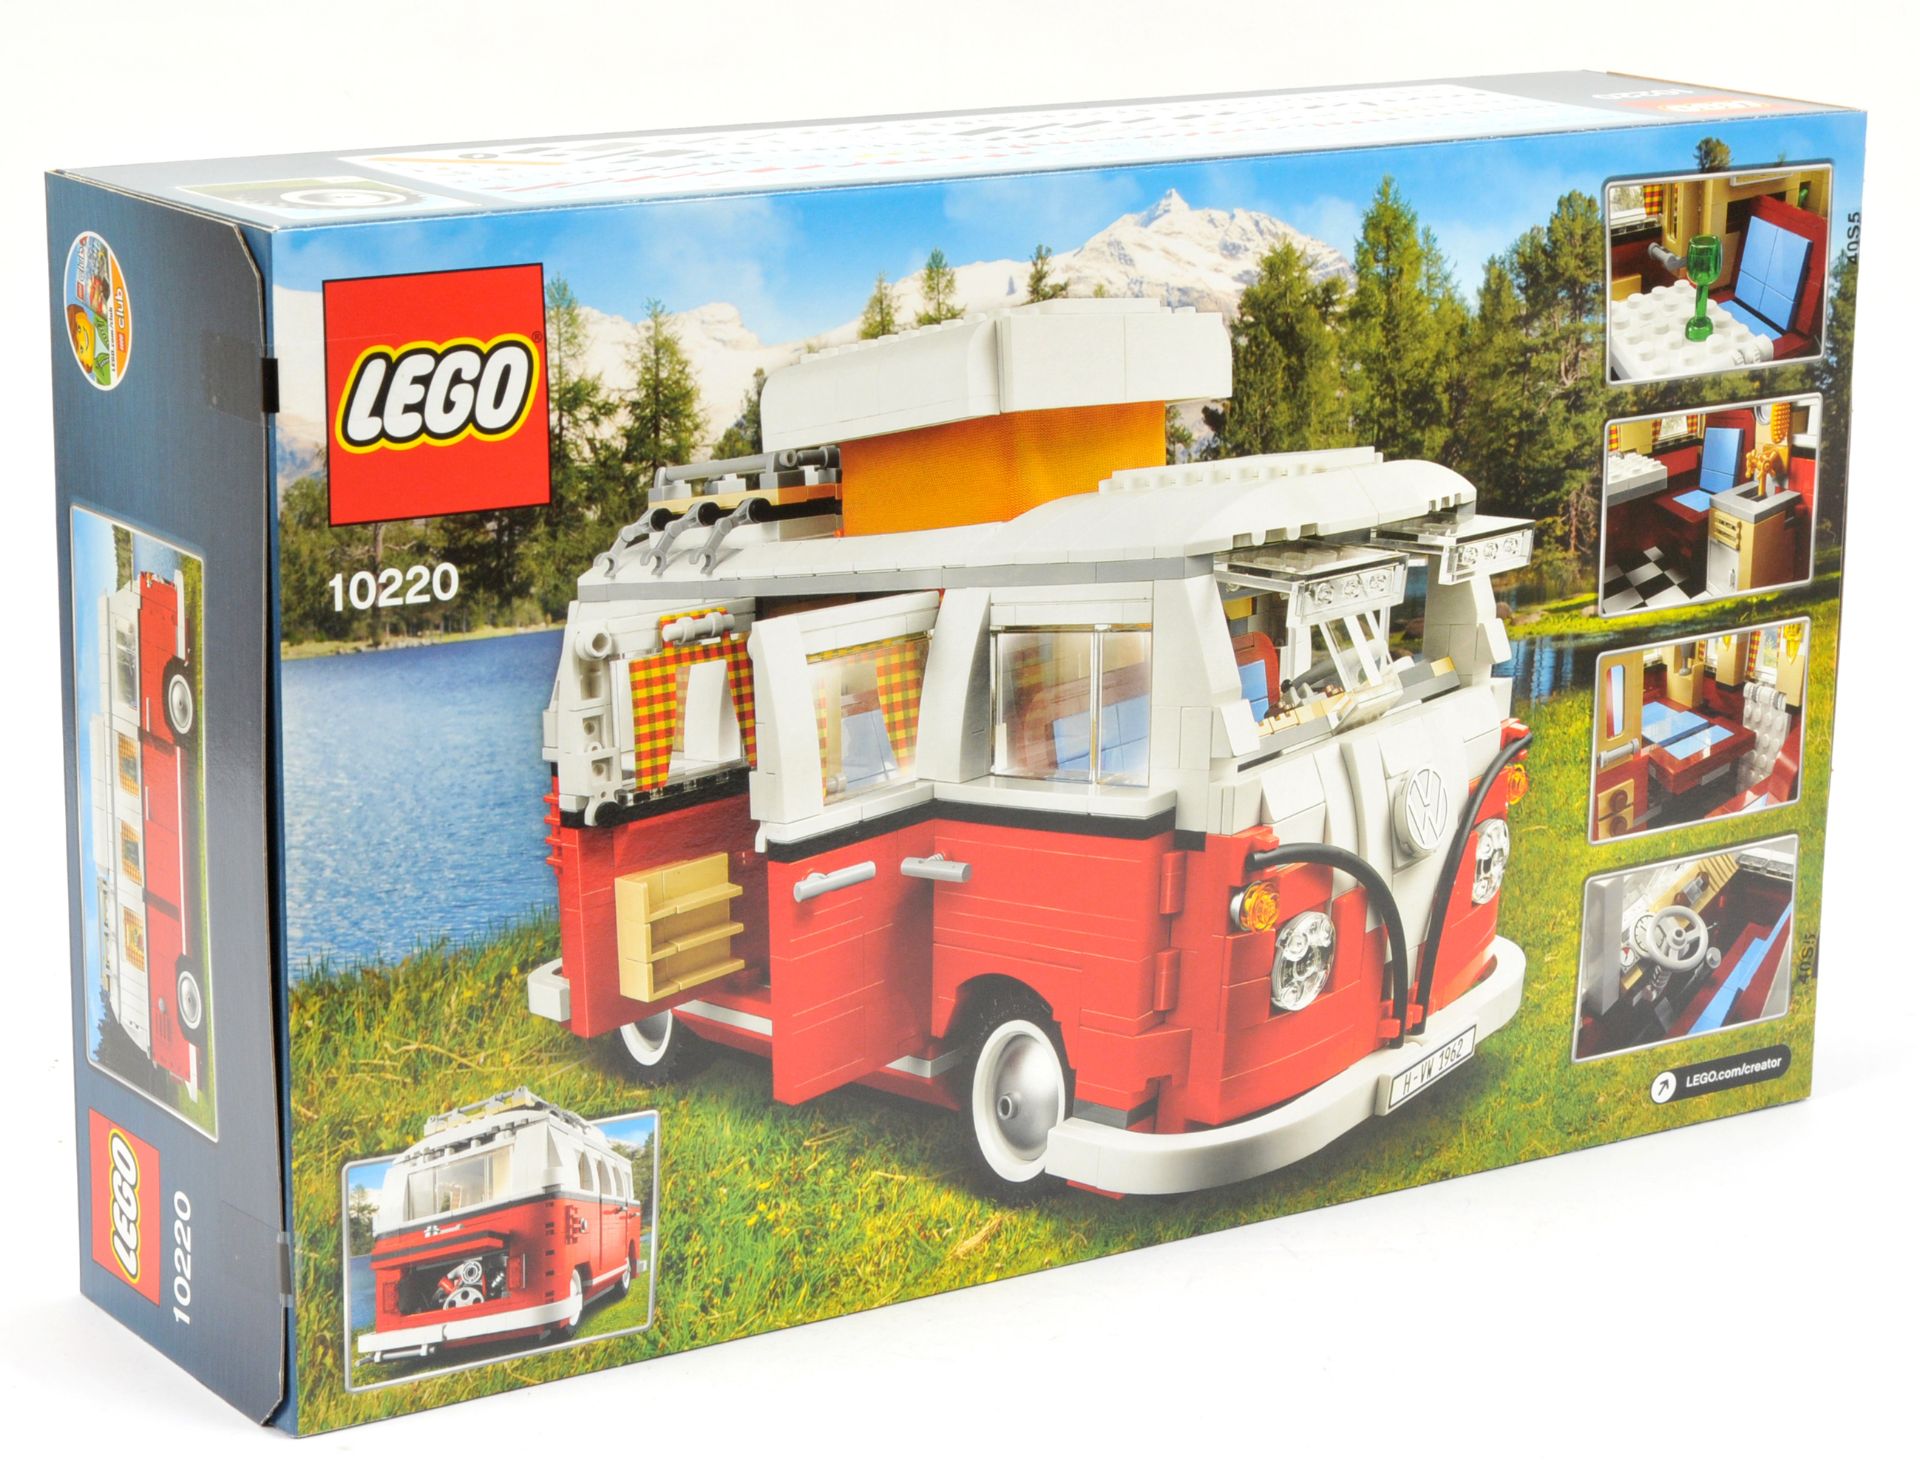 Lego Creator 10220 VW Volkswagen T1 Camper Van set, within Near Mint sealed packaging. - Image 2 of 2